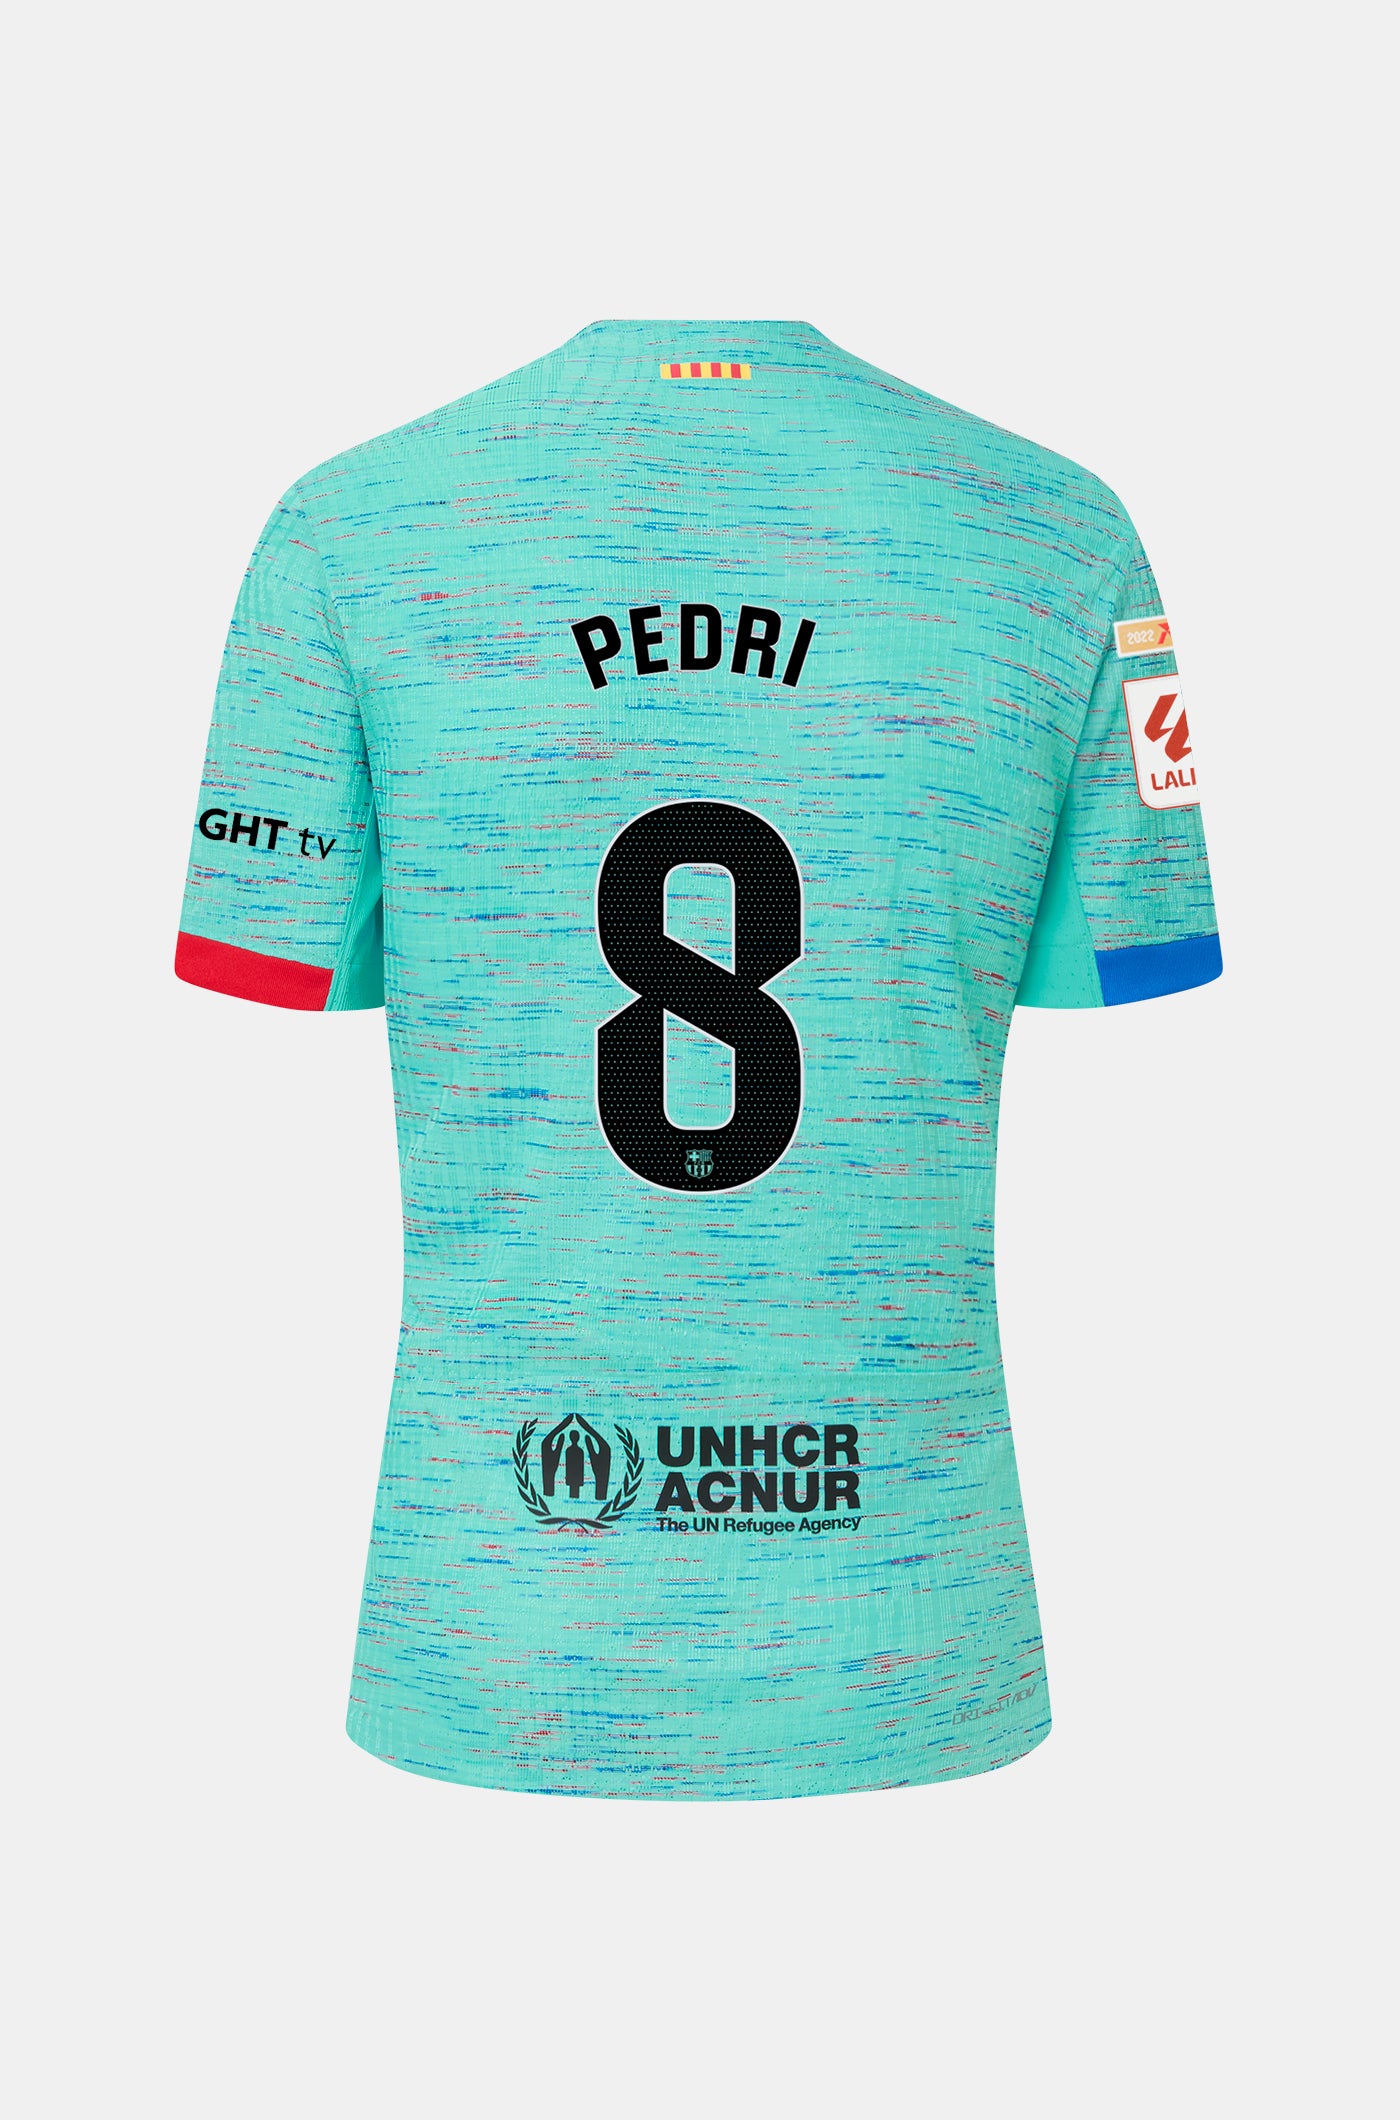 LFP FC Barcelona third shirt 23/24 Player’s Edition  - PEDRI